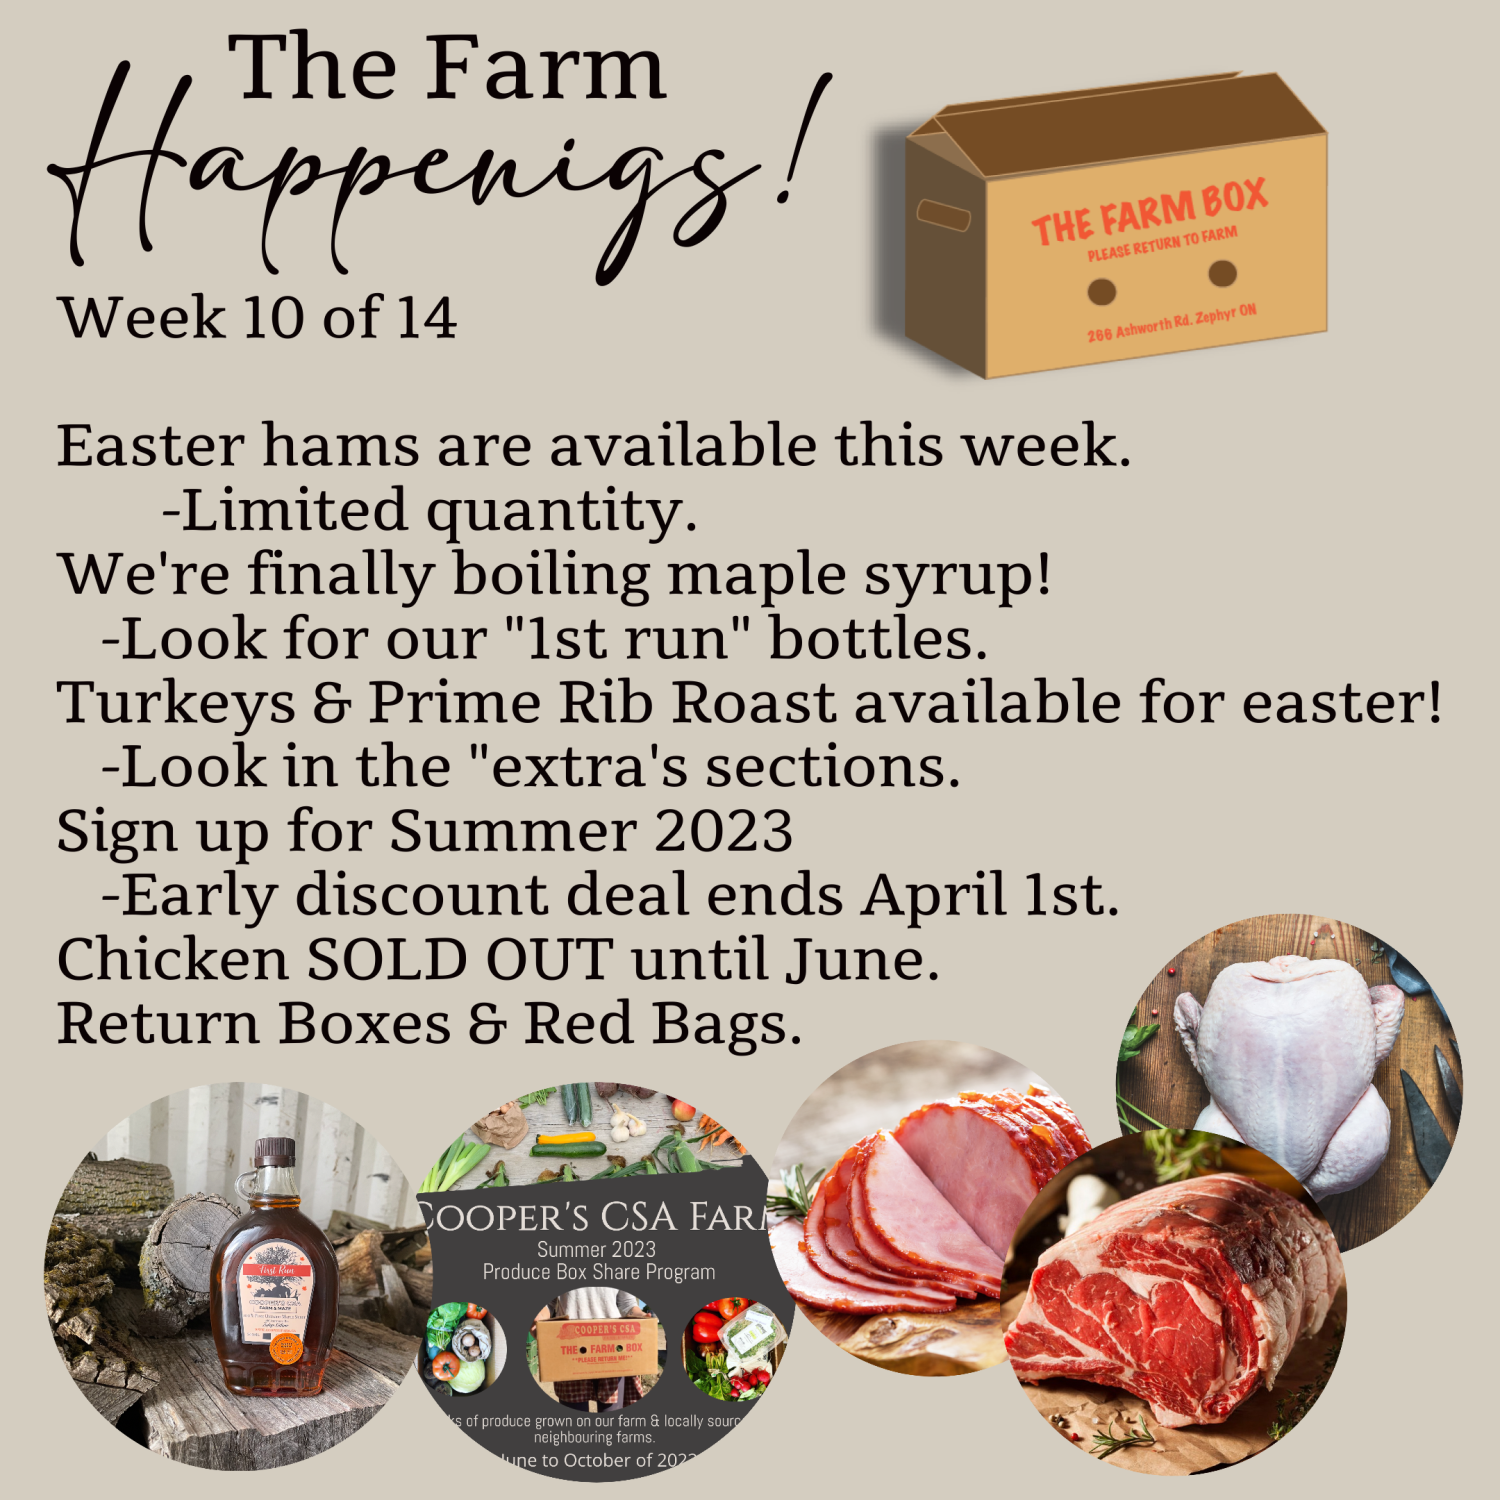 "The Farm Box"-Coopers CSA Farm Farm Happenings Week 10